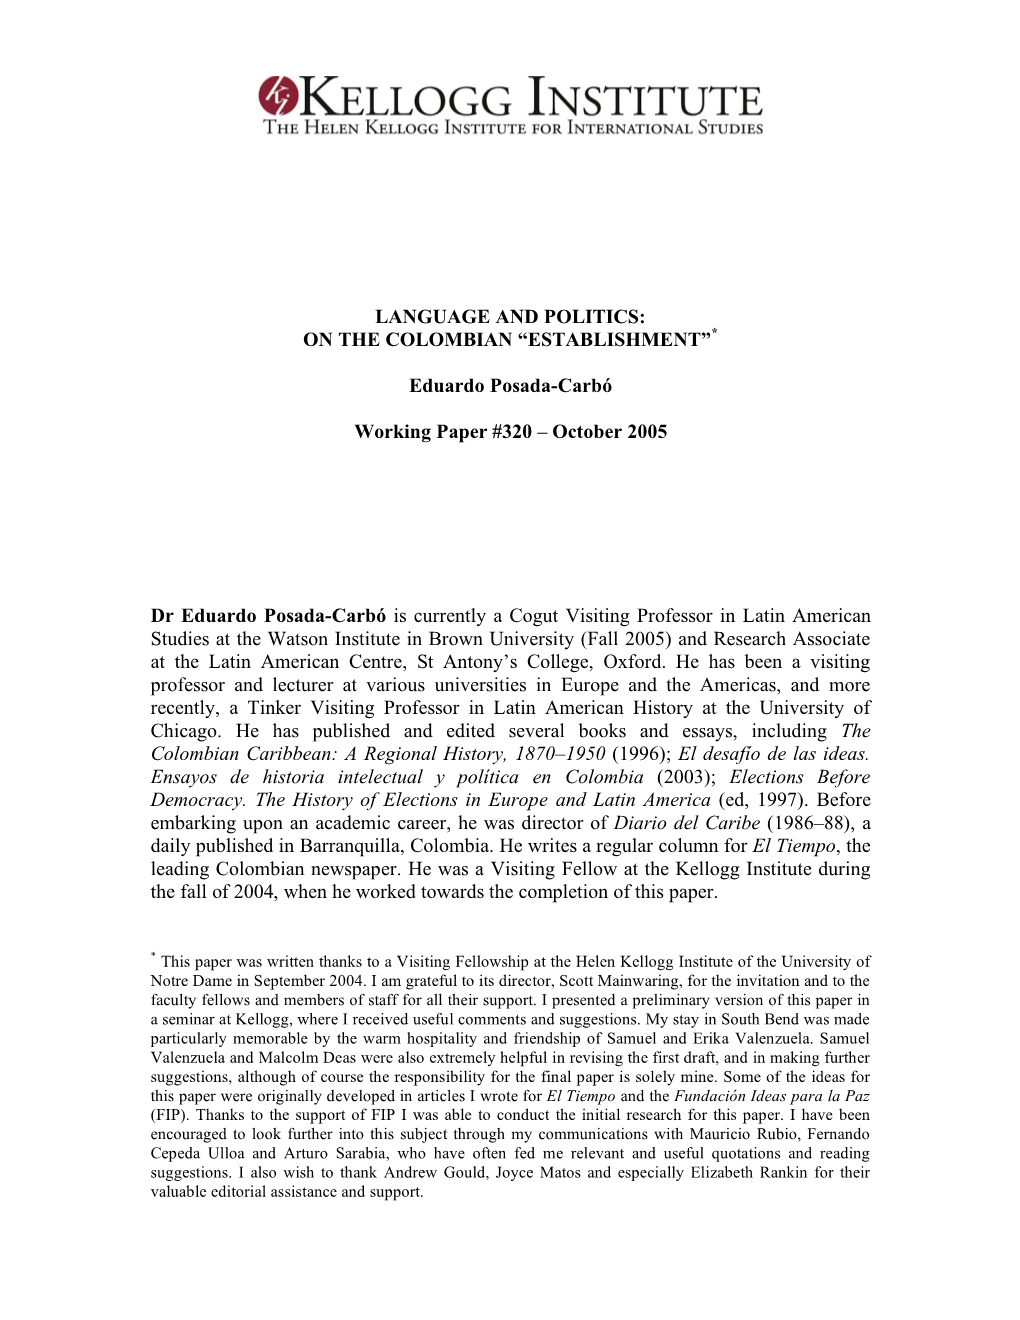 Eduardo Posada-Carbó Working Paper #320